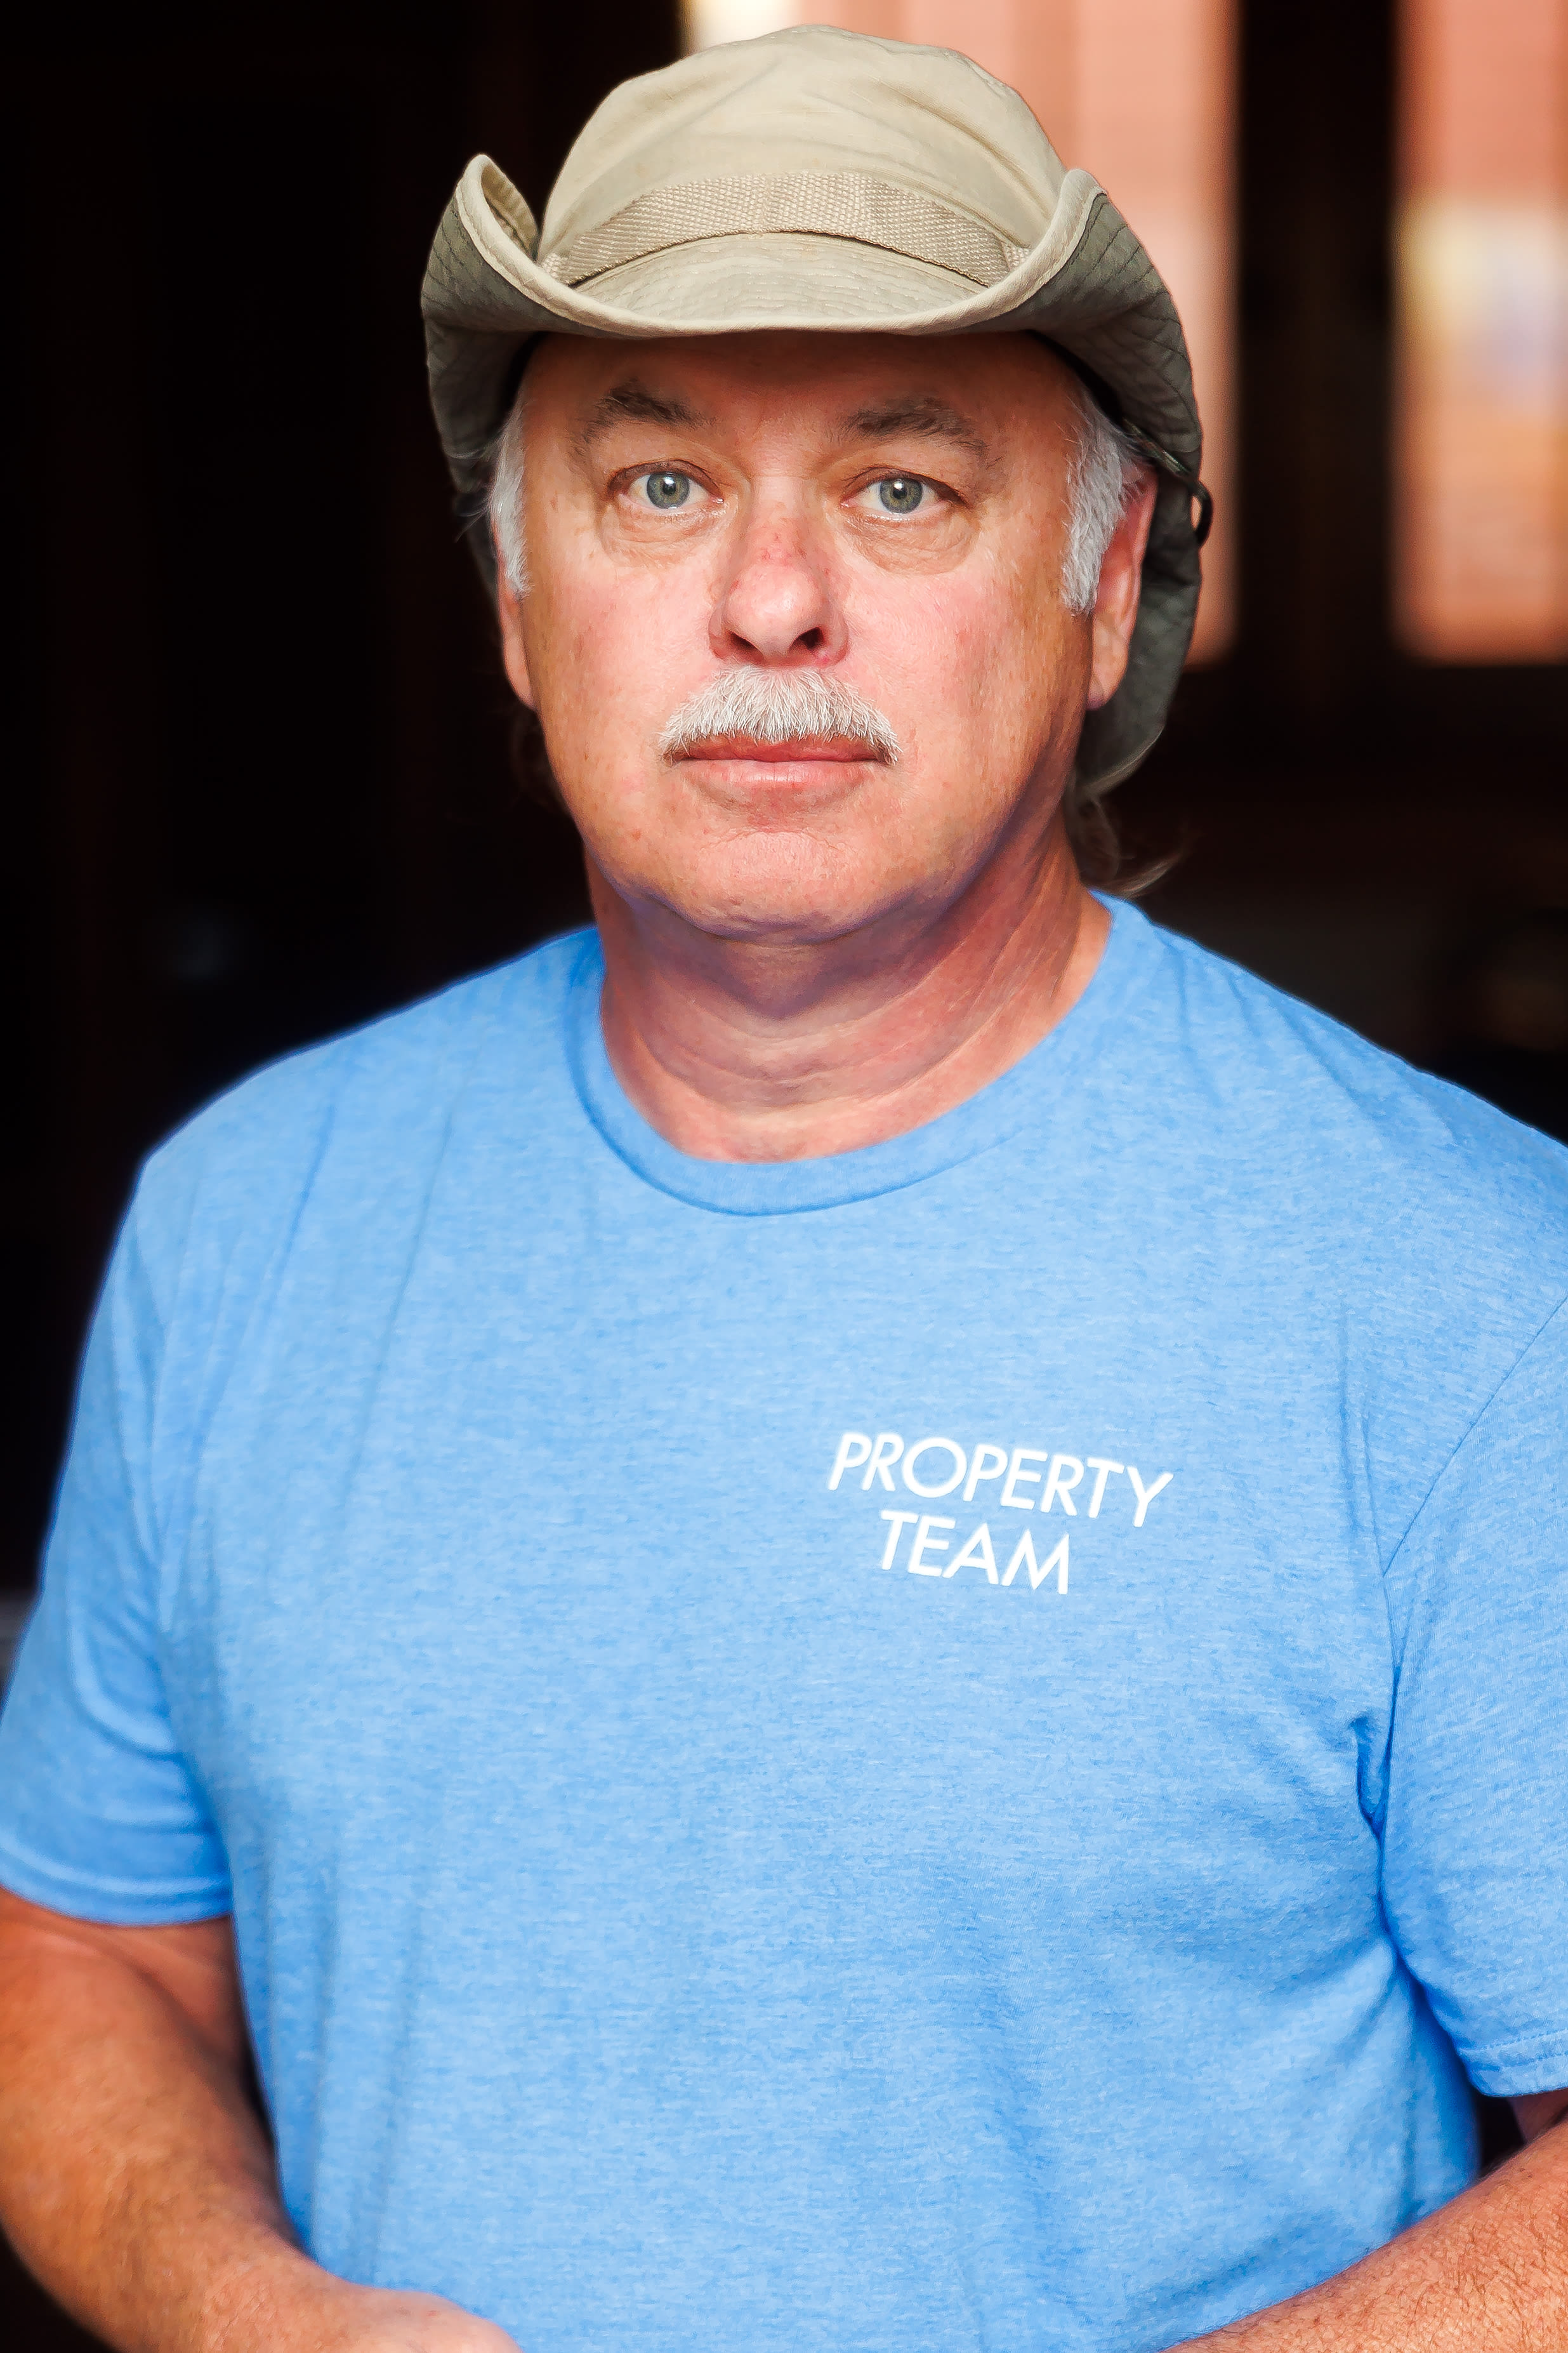 Frank Pursley, Regional Maintenance Supervisor for S&S Property Management in Nashville, Tennessee